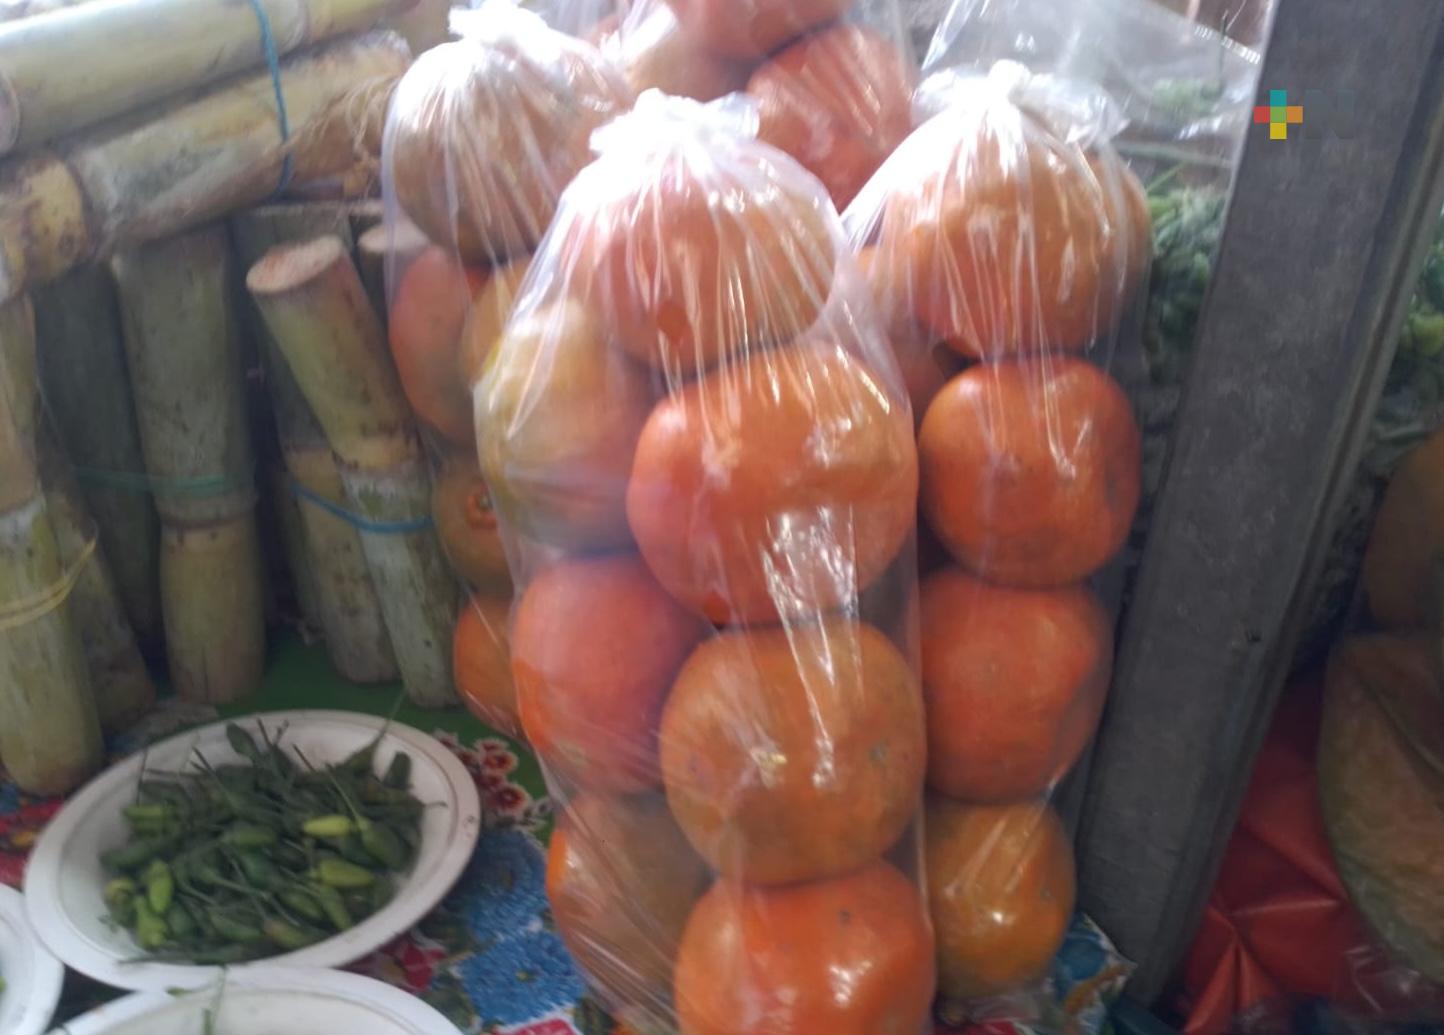 Venta de mandarina en diciembre es regular, señalan comerciantes del puerto